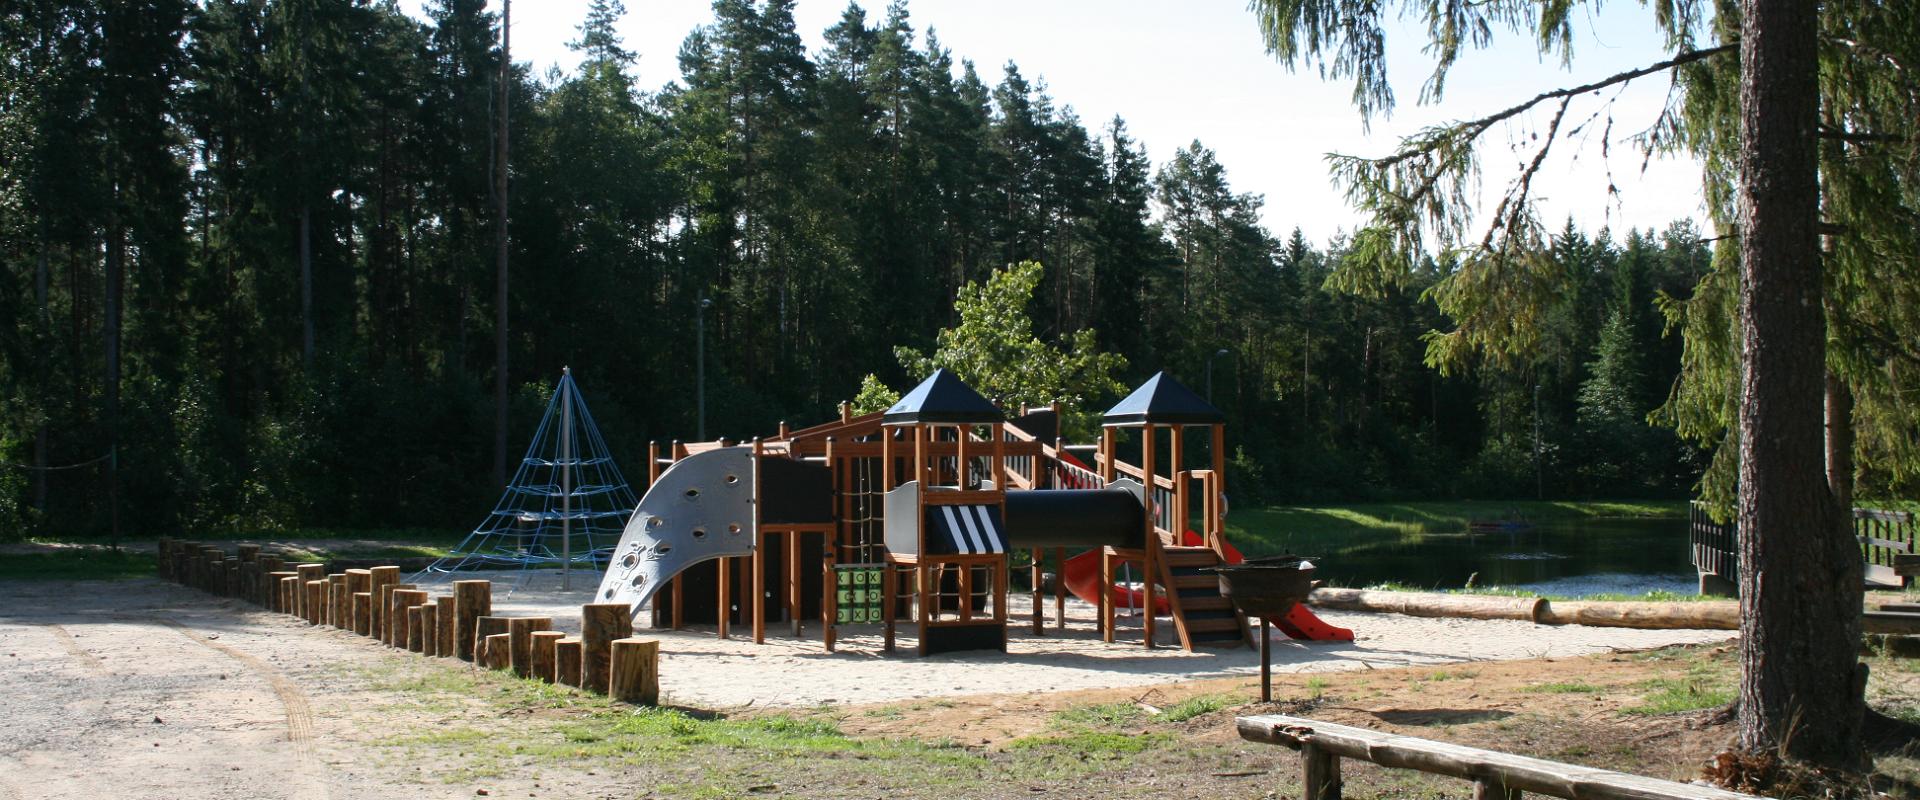 Valgehobusemäe Children’s Playground